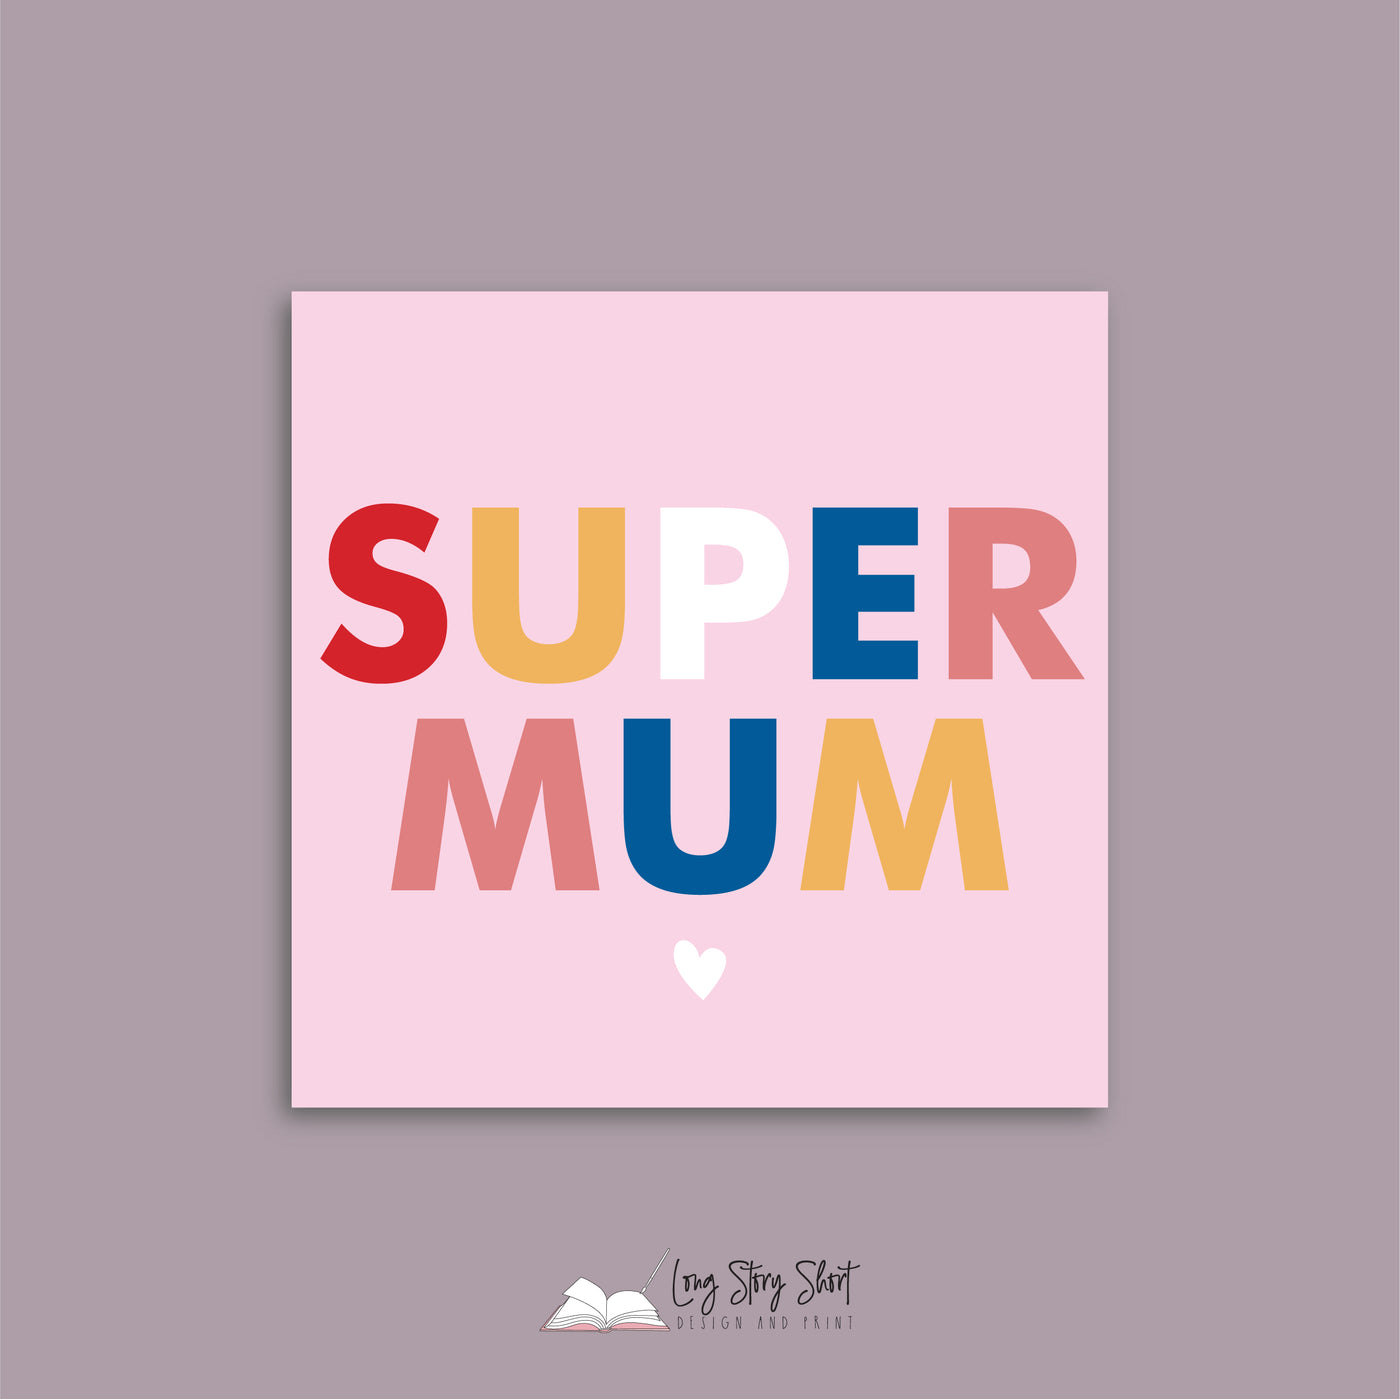 Boss Mum Square Vinyl Label Pack